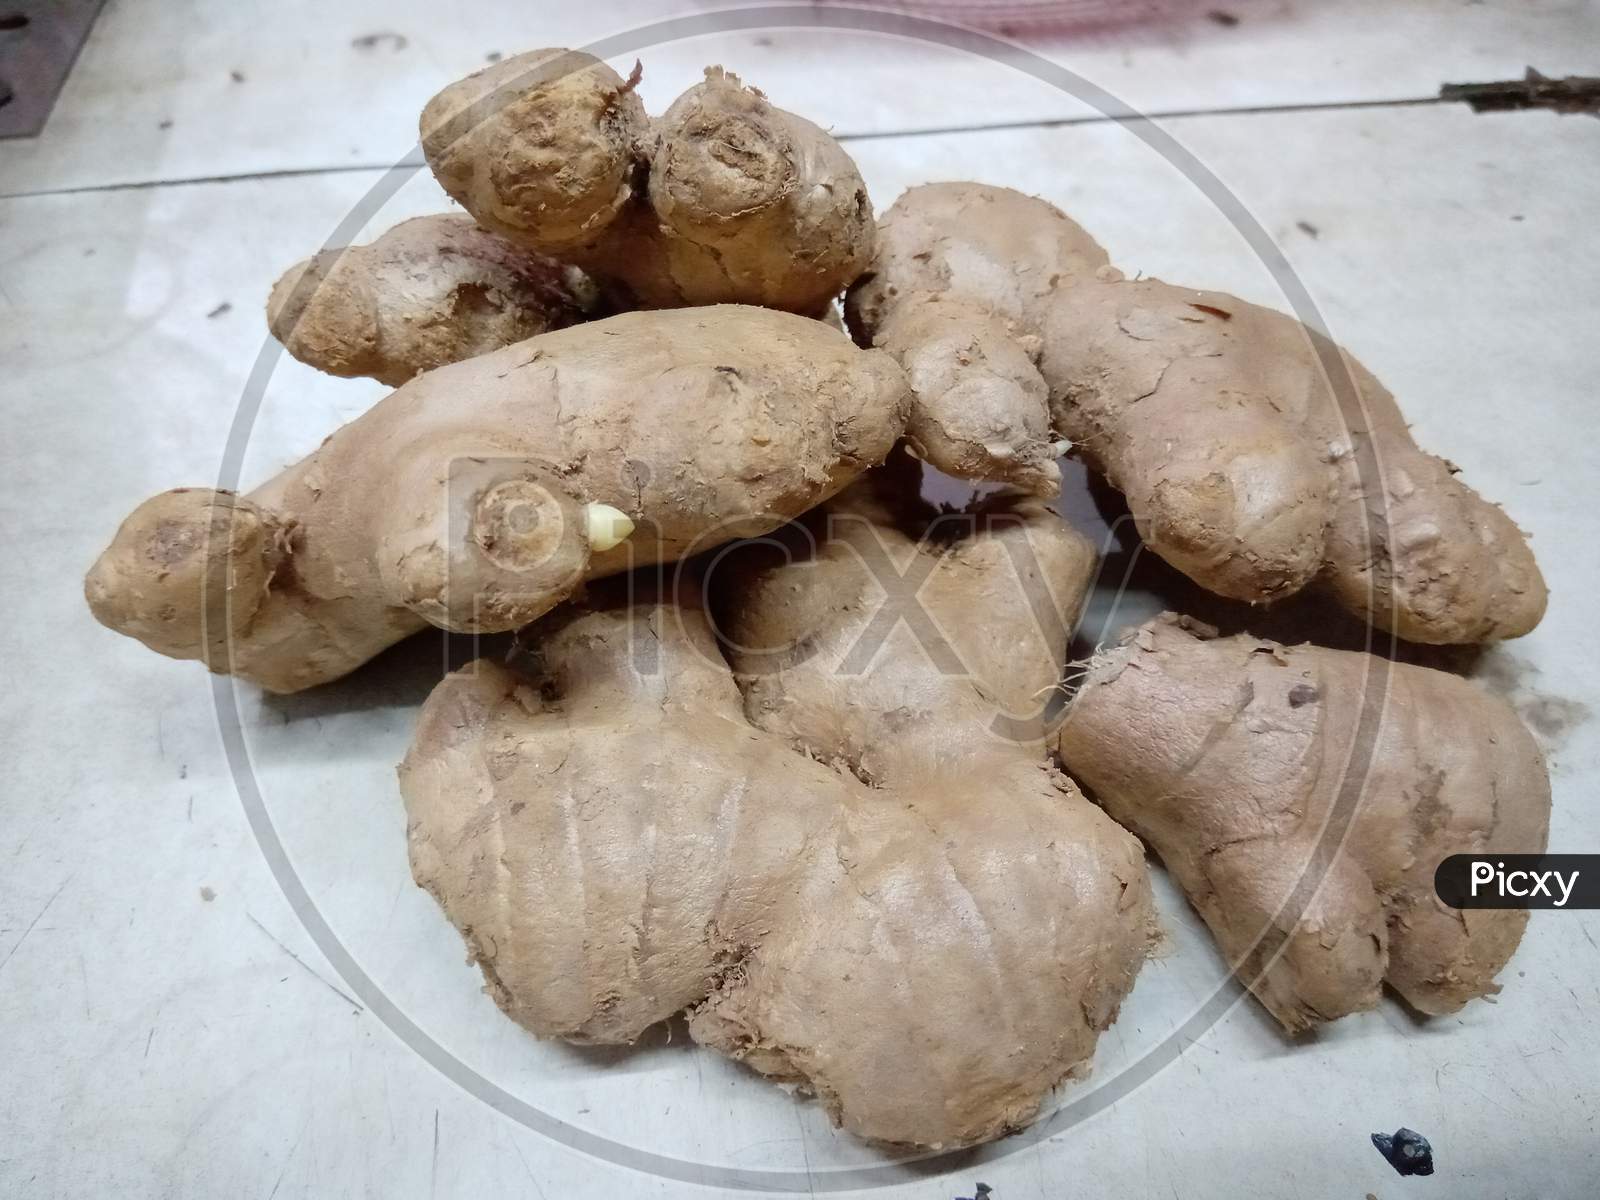 Fresh vegetable ginger root in the market